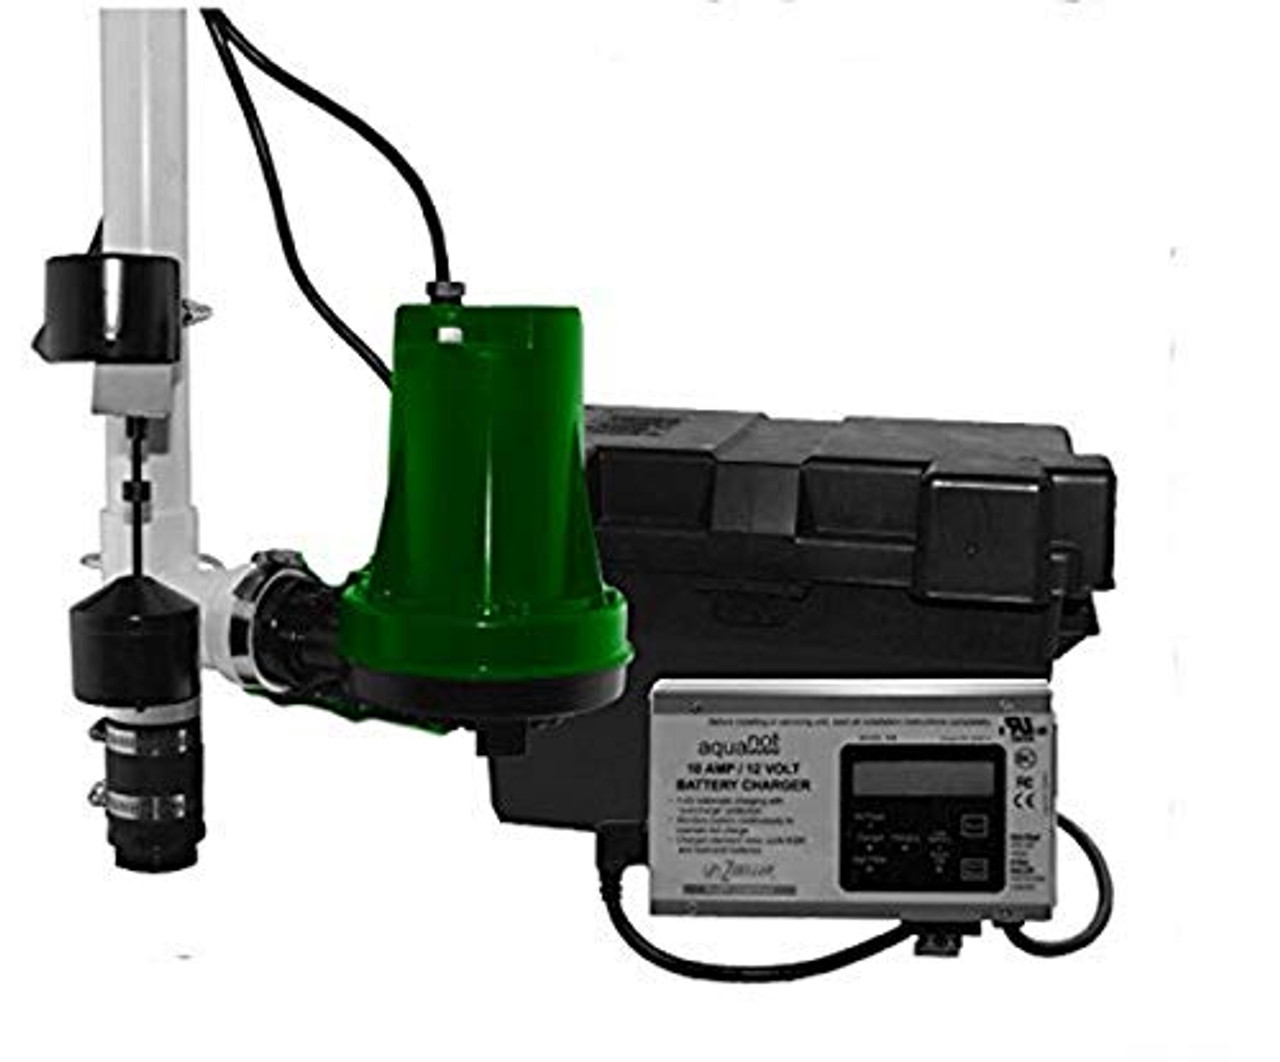 Zoeller aquanot 508 バッテリー バックアップ システム (508-0005) JB Tools